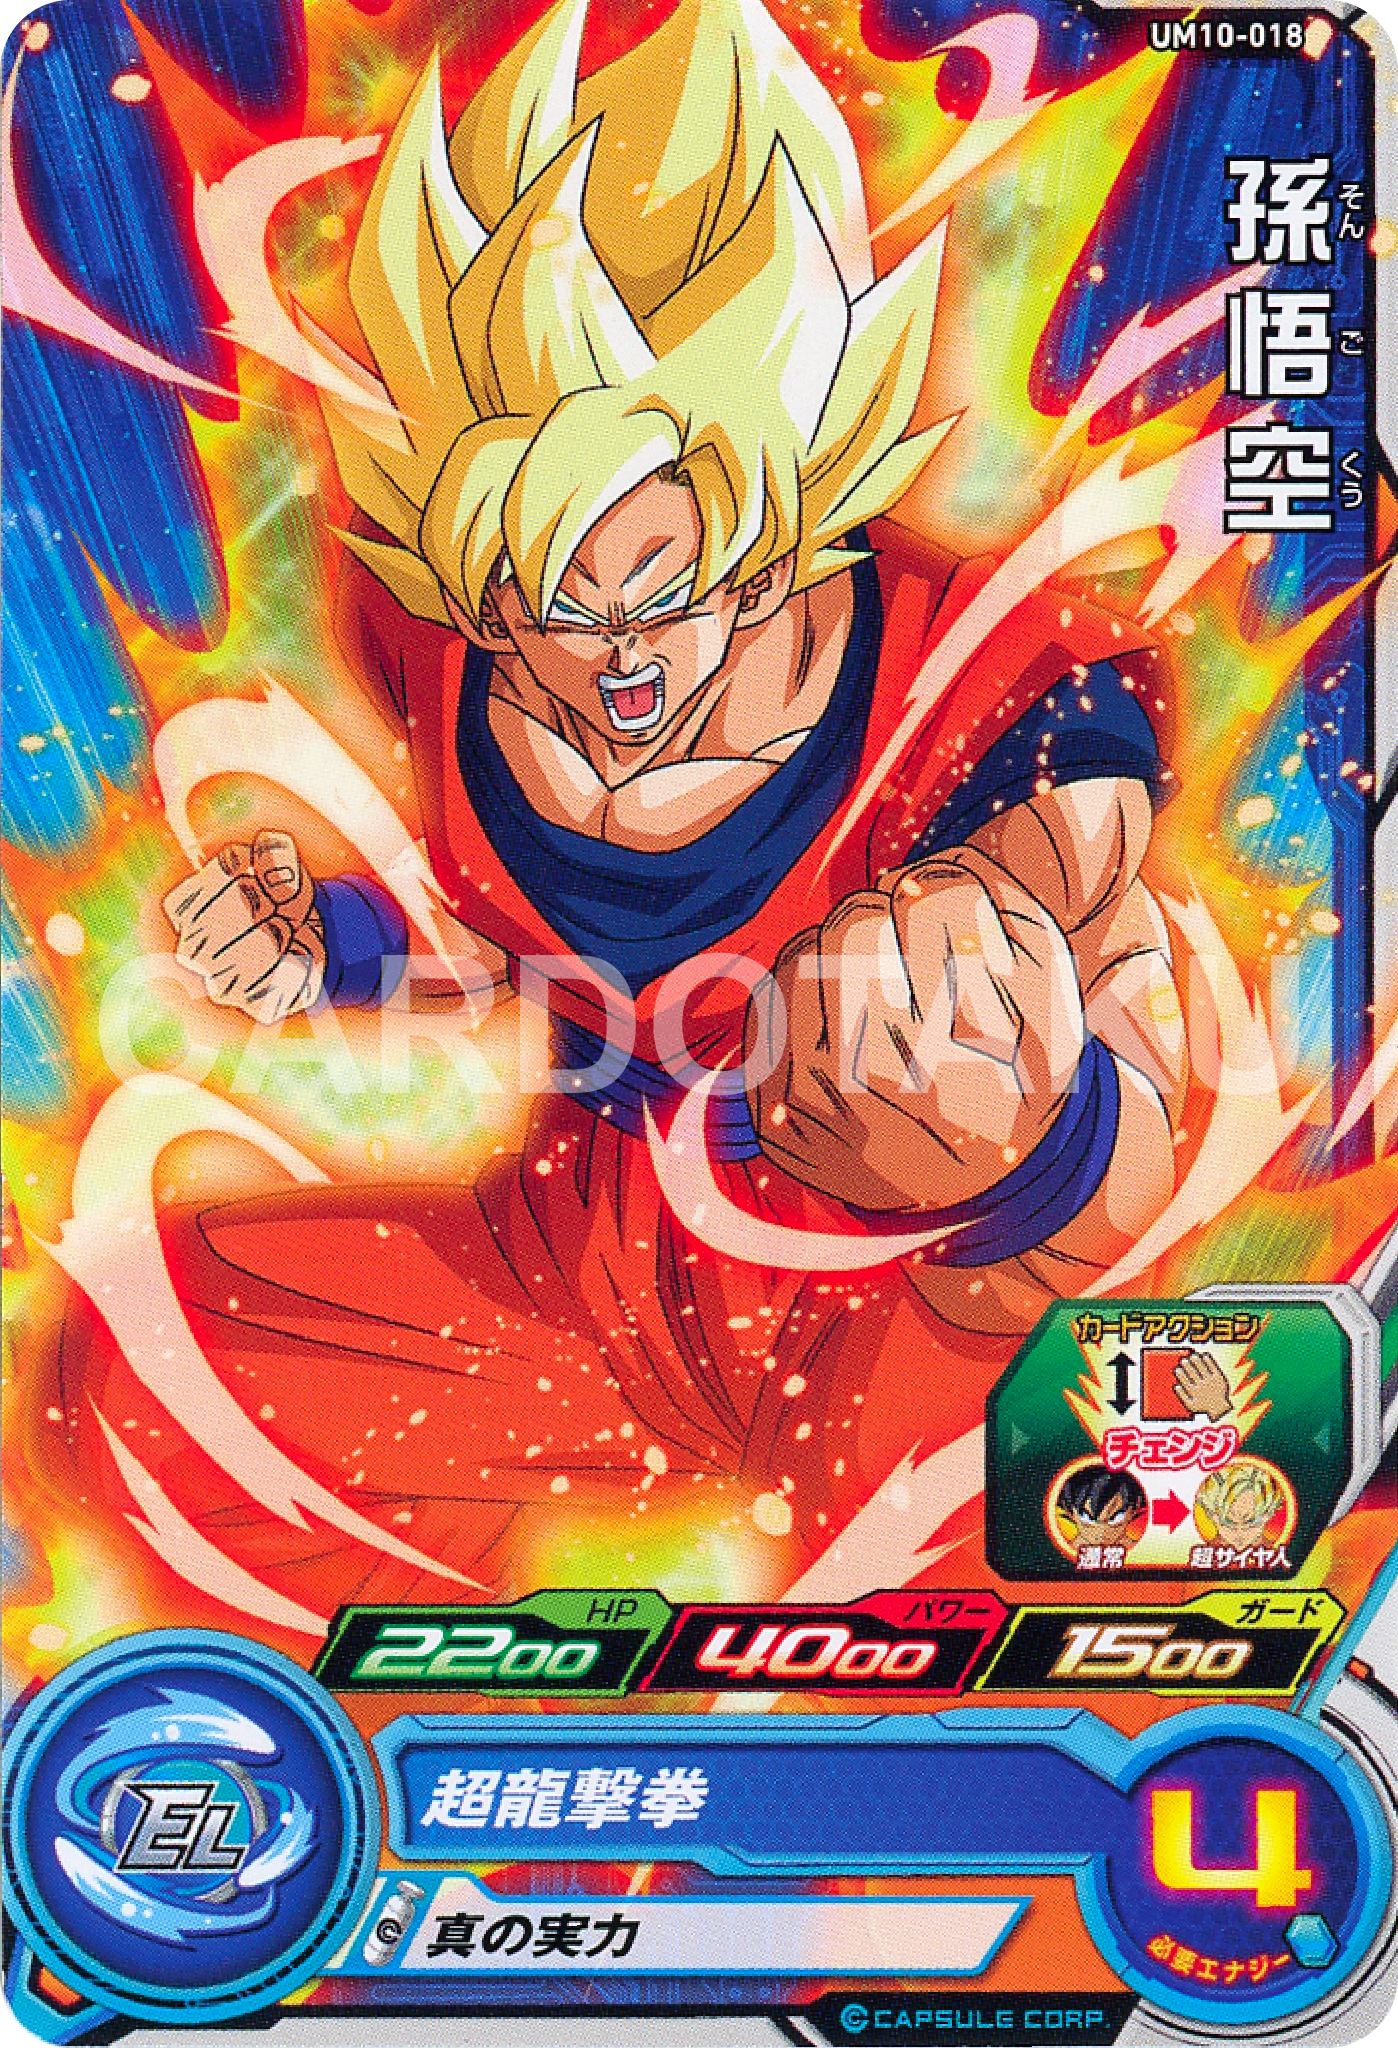 SUPER DRAGON BALL HEROES UM10-018 Son Goku